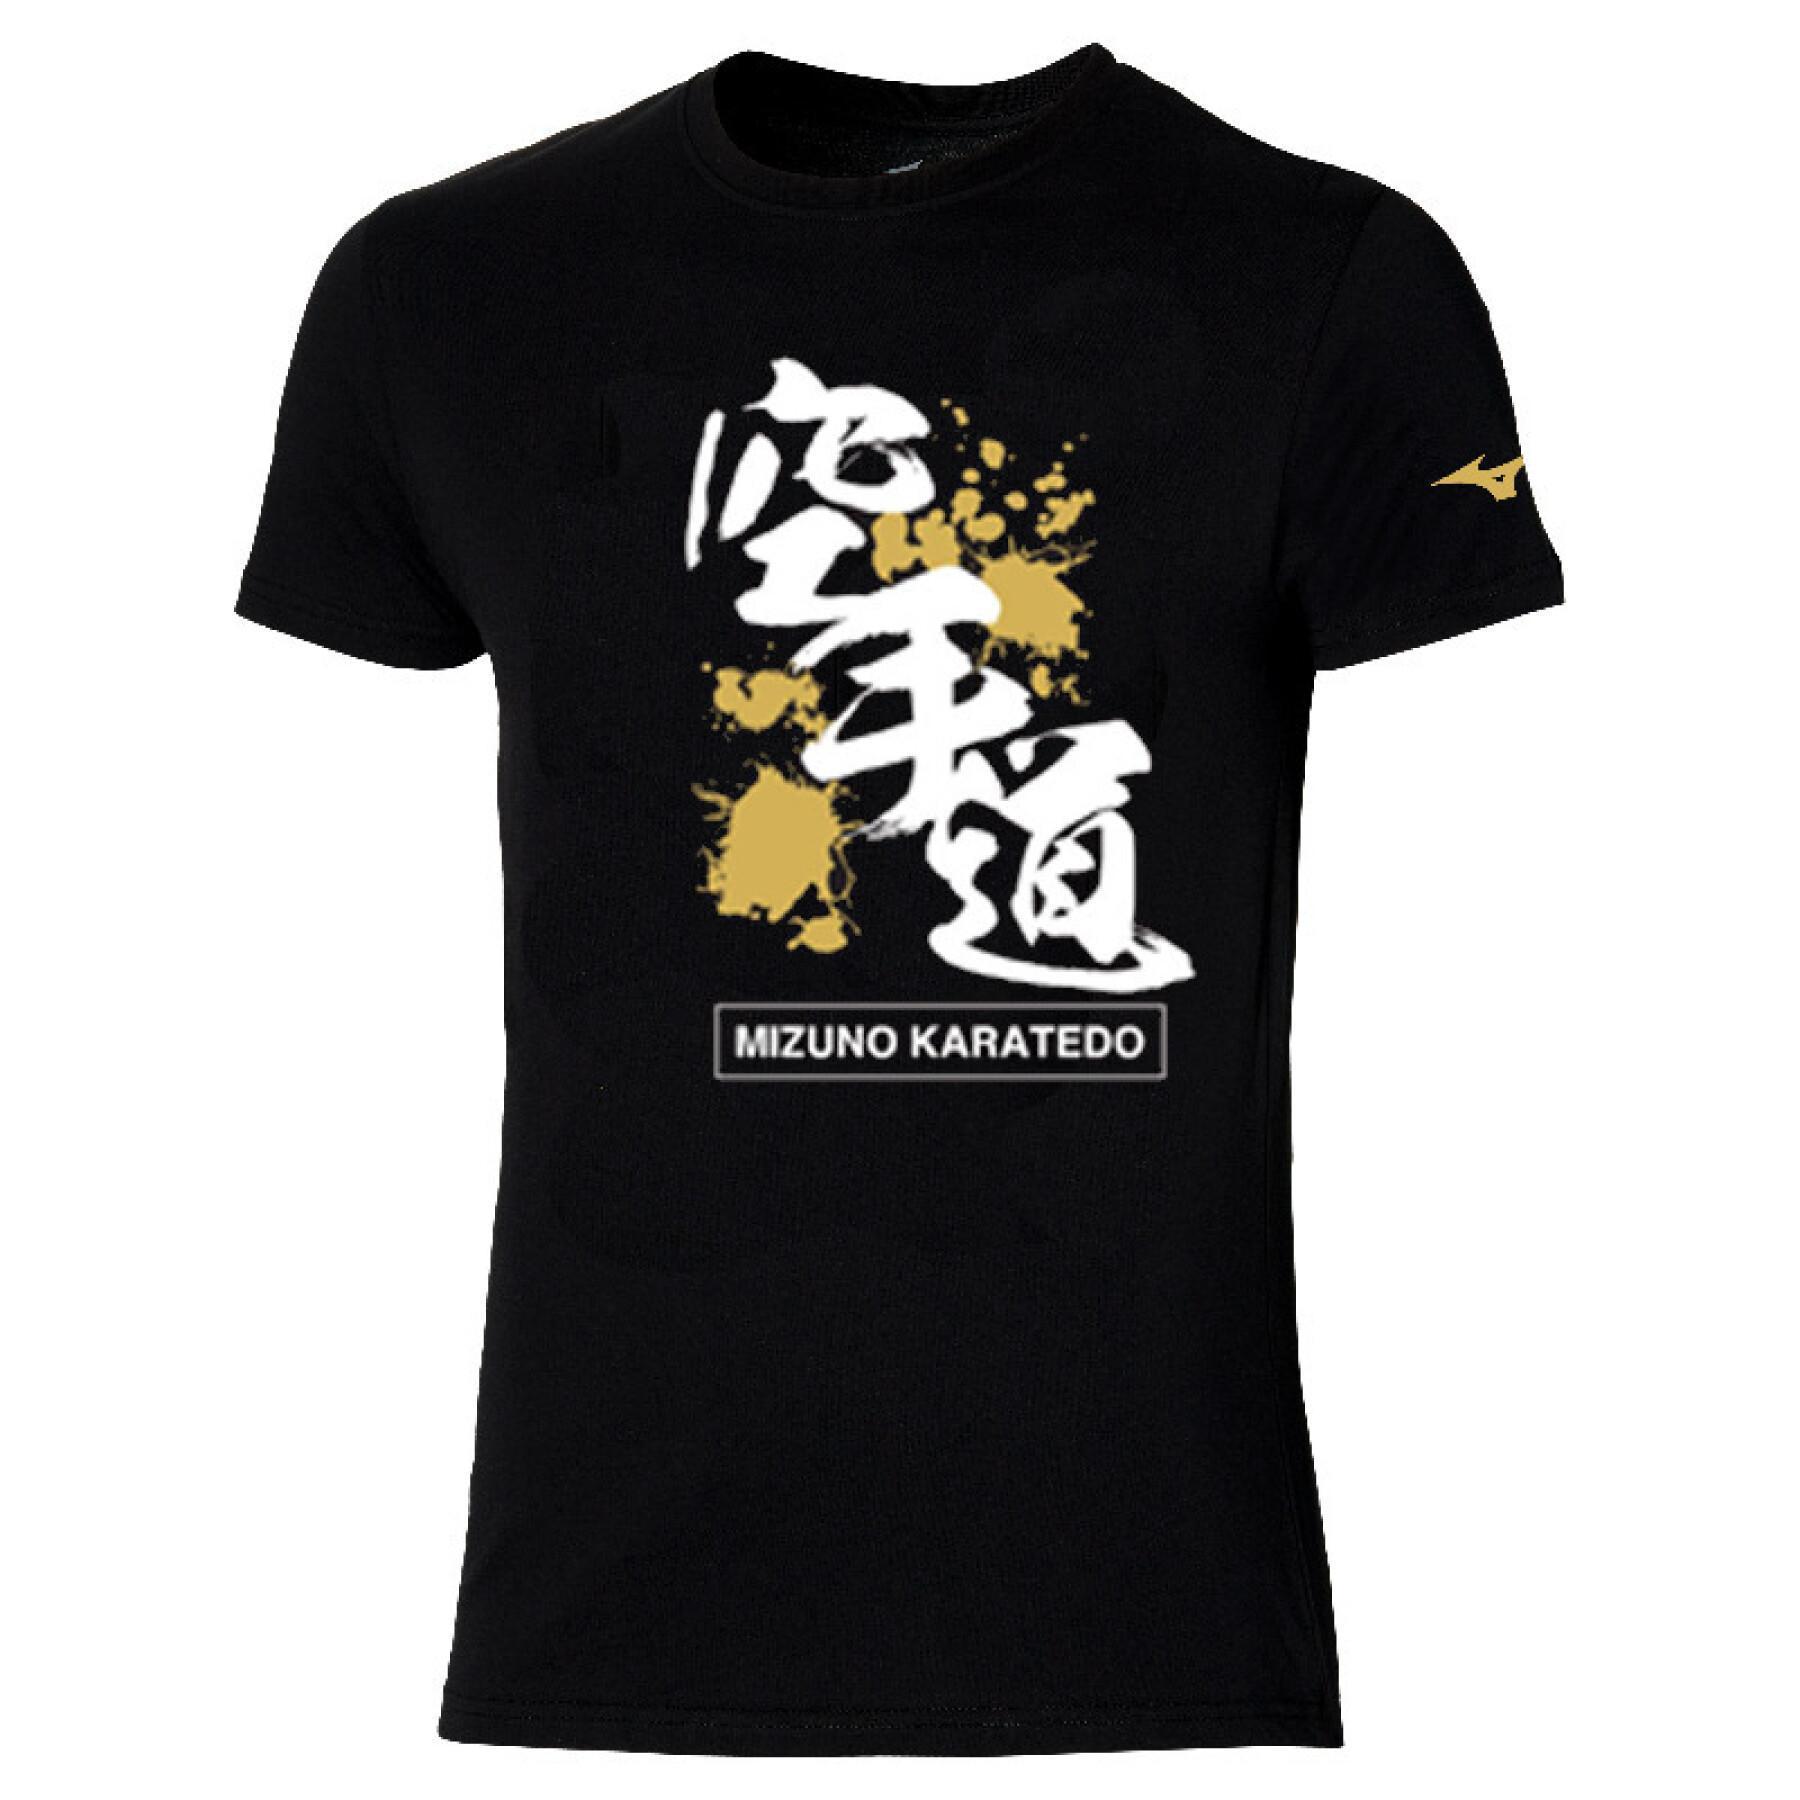 Kinder karate T-shirt Mizuno